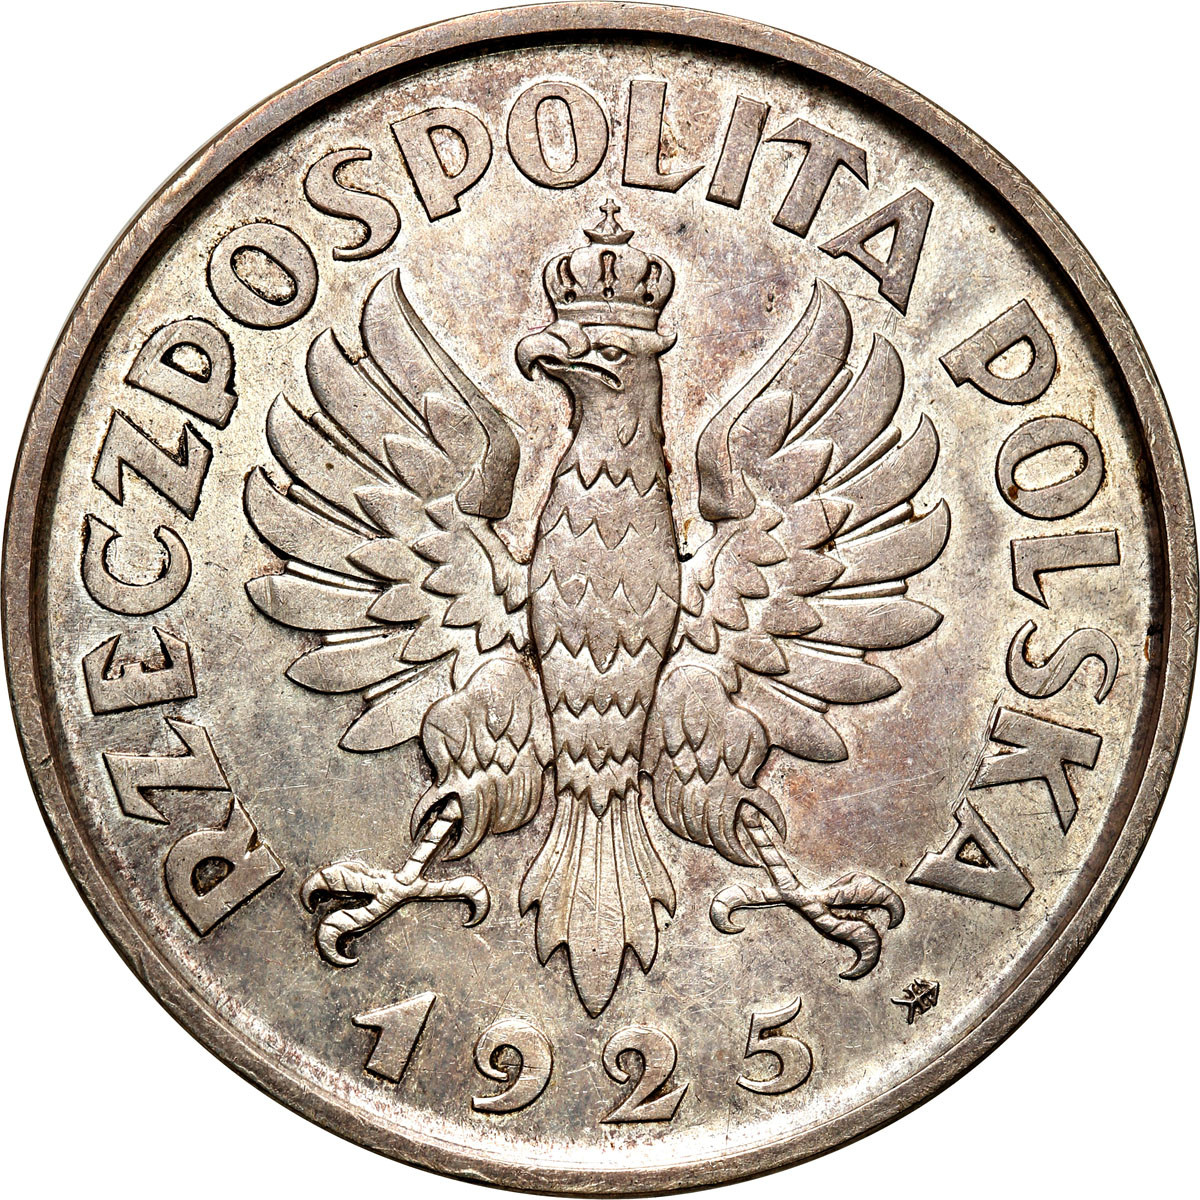 PRÓBA srebro, 5 złotych 1925, Konstytucja - 100 perełek - z oryginalną kopertką